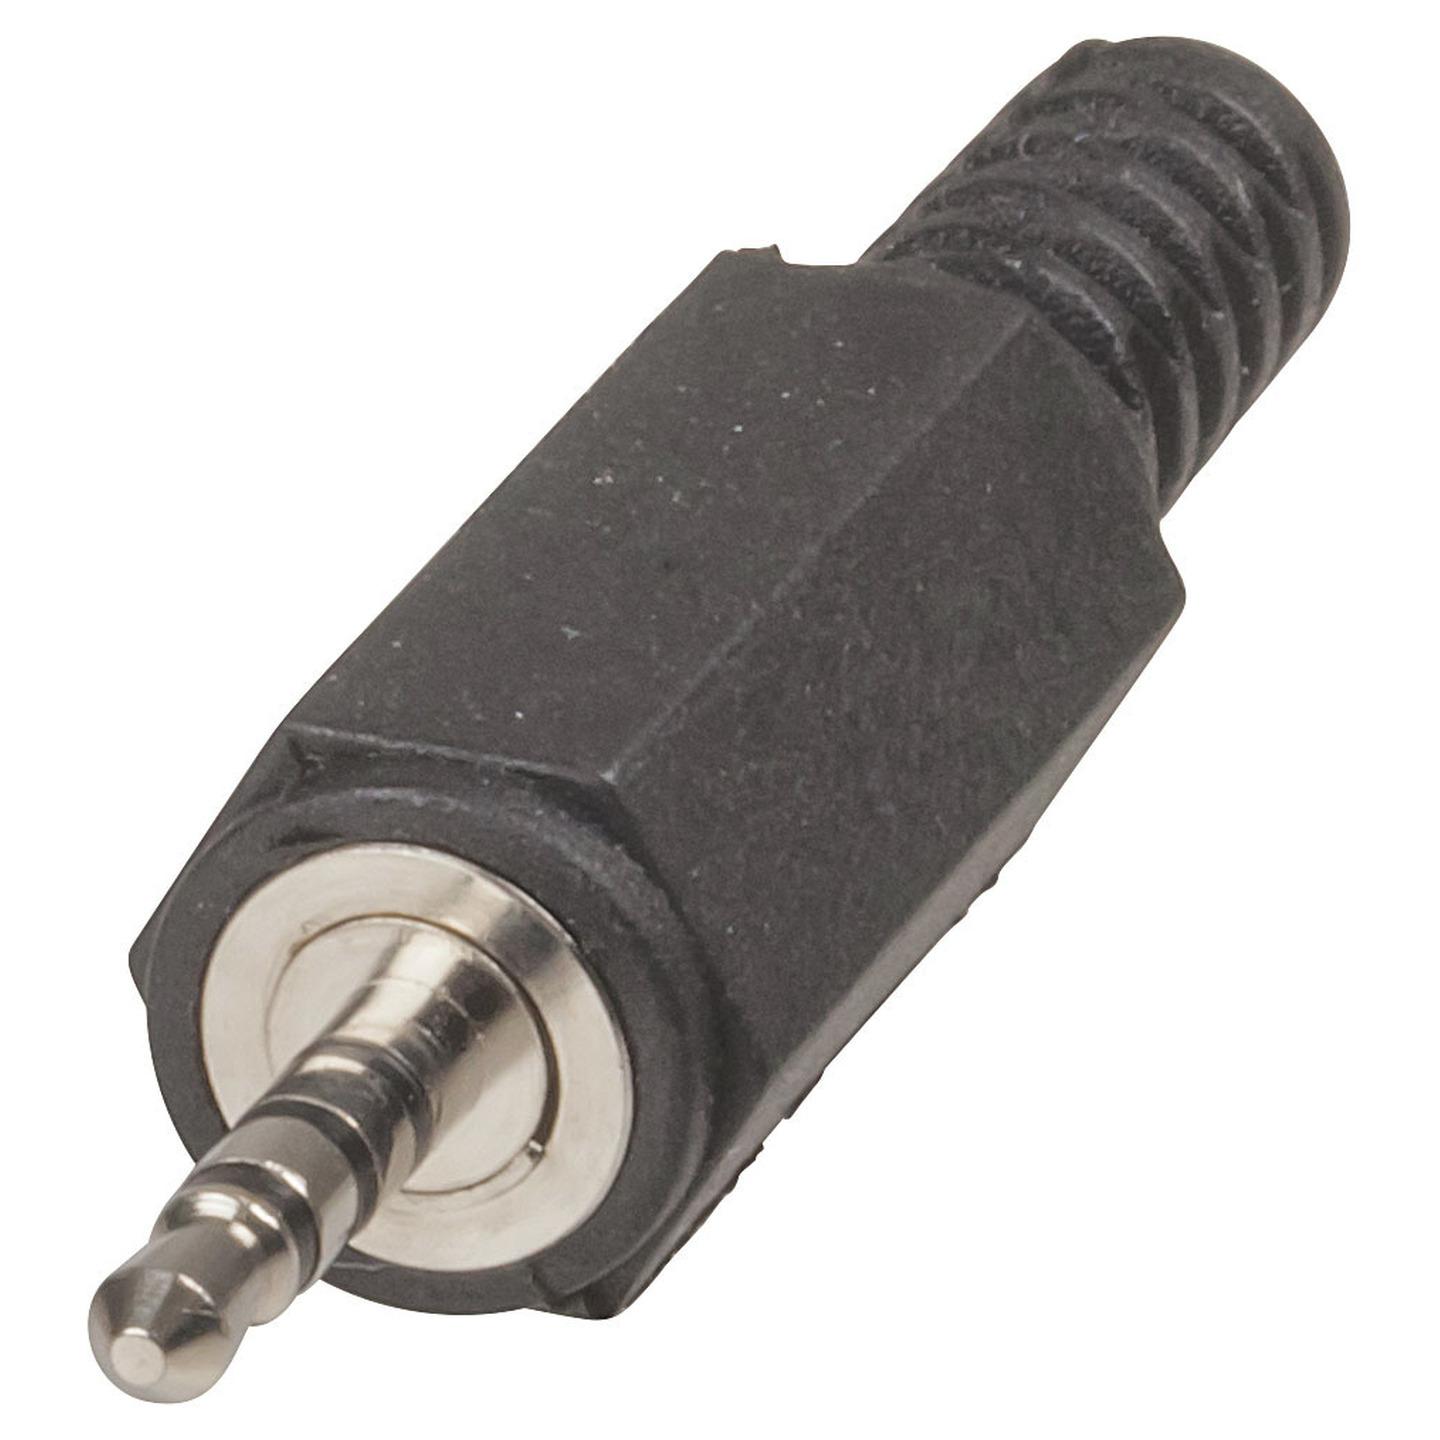 2.5mm 4 contact Miniature Plug - Black